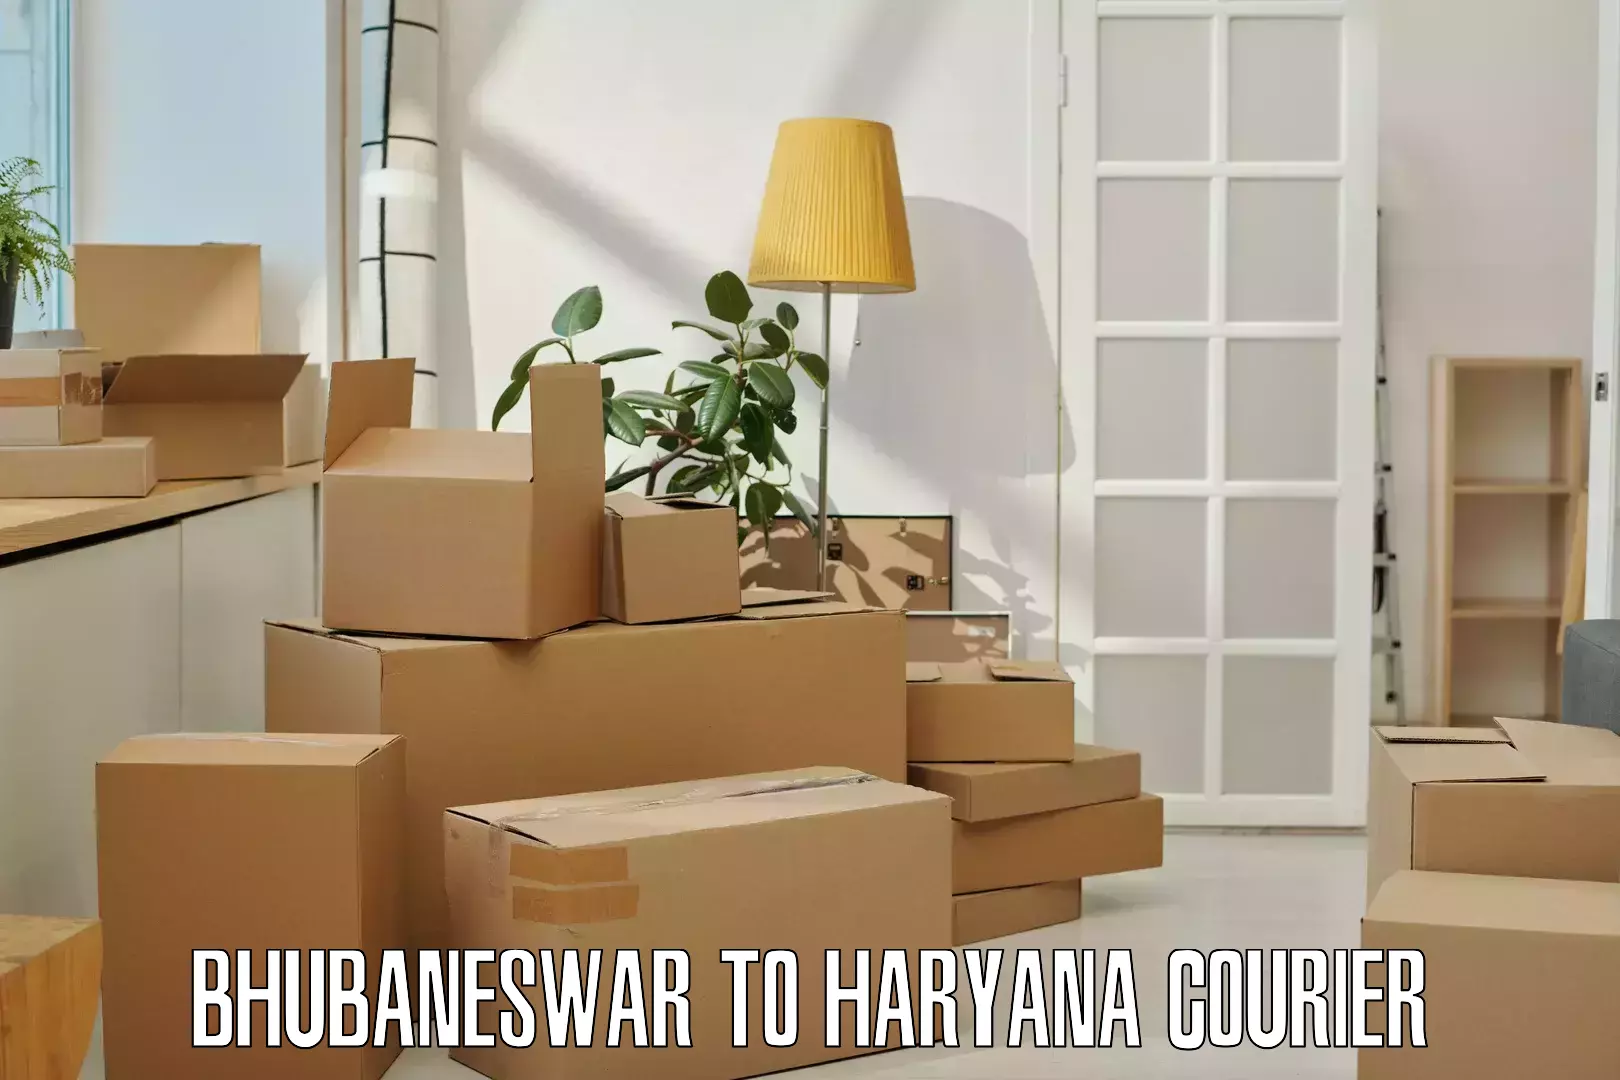 Nationwide shipping capabilities Bhubaneswar to Gurgaon